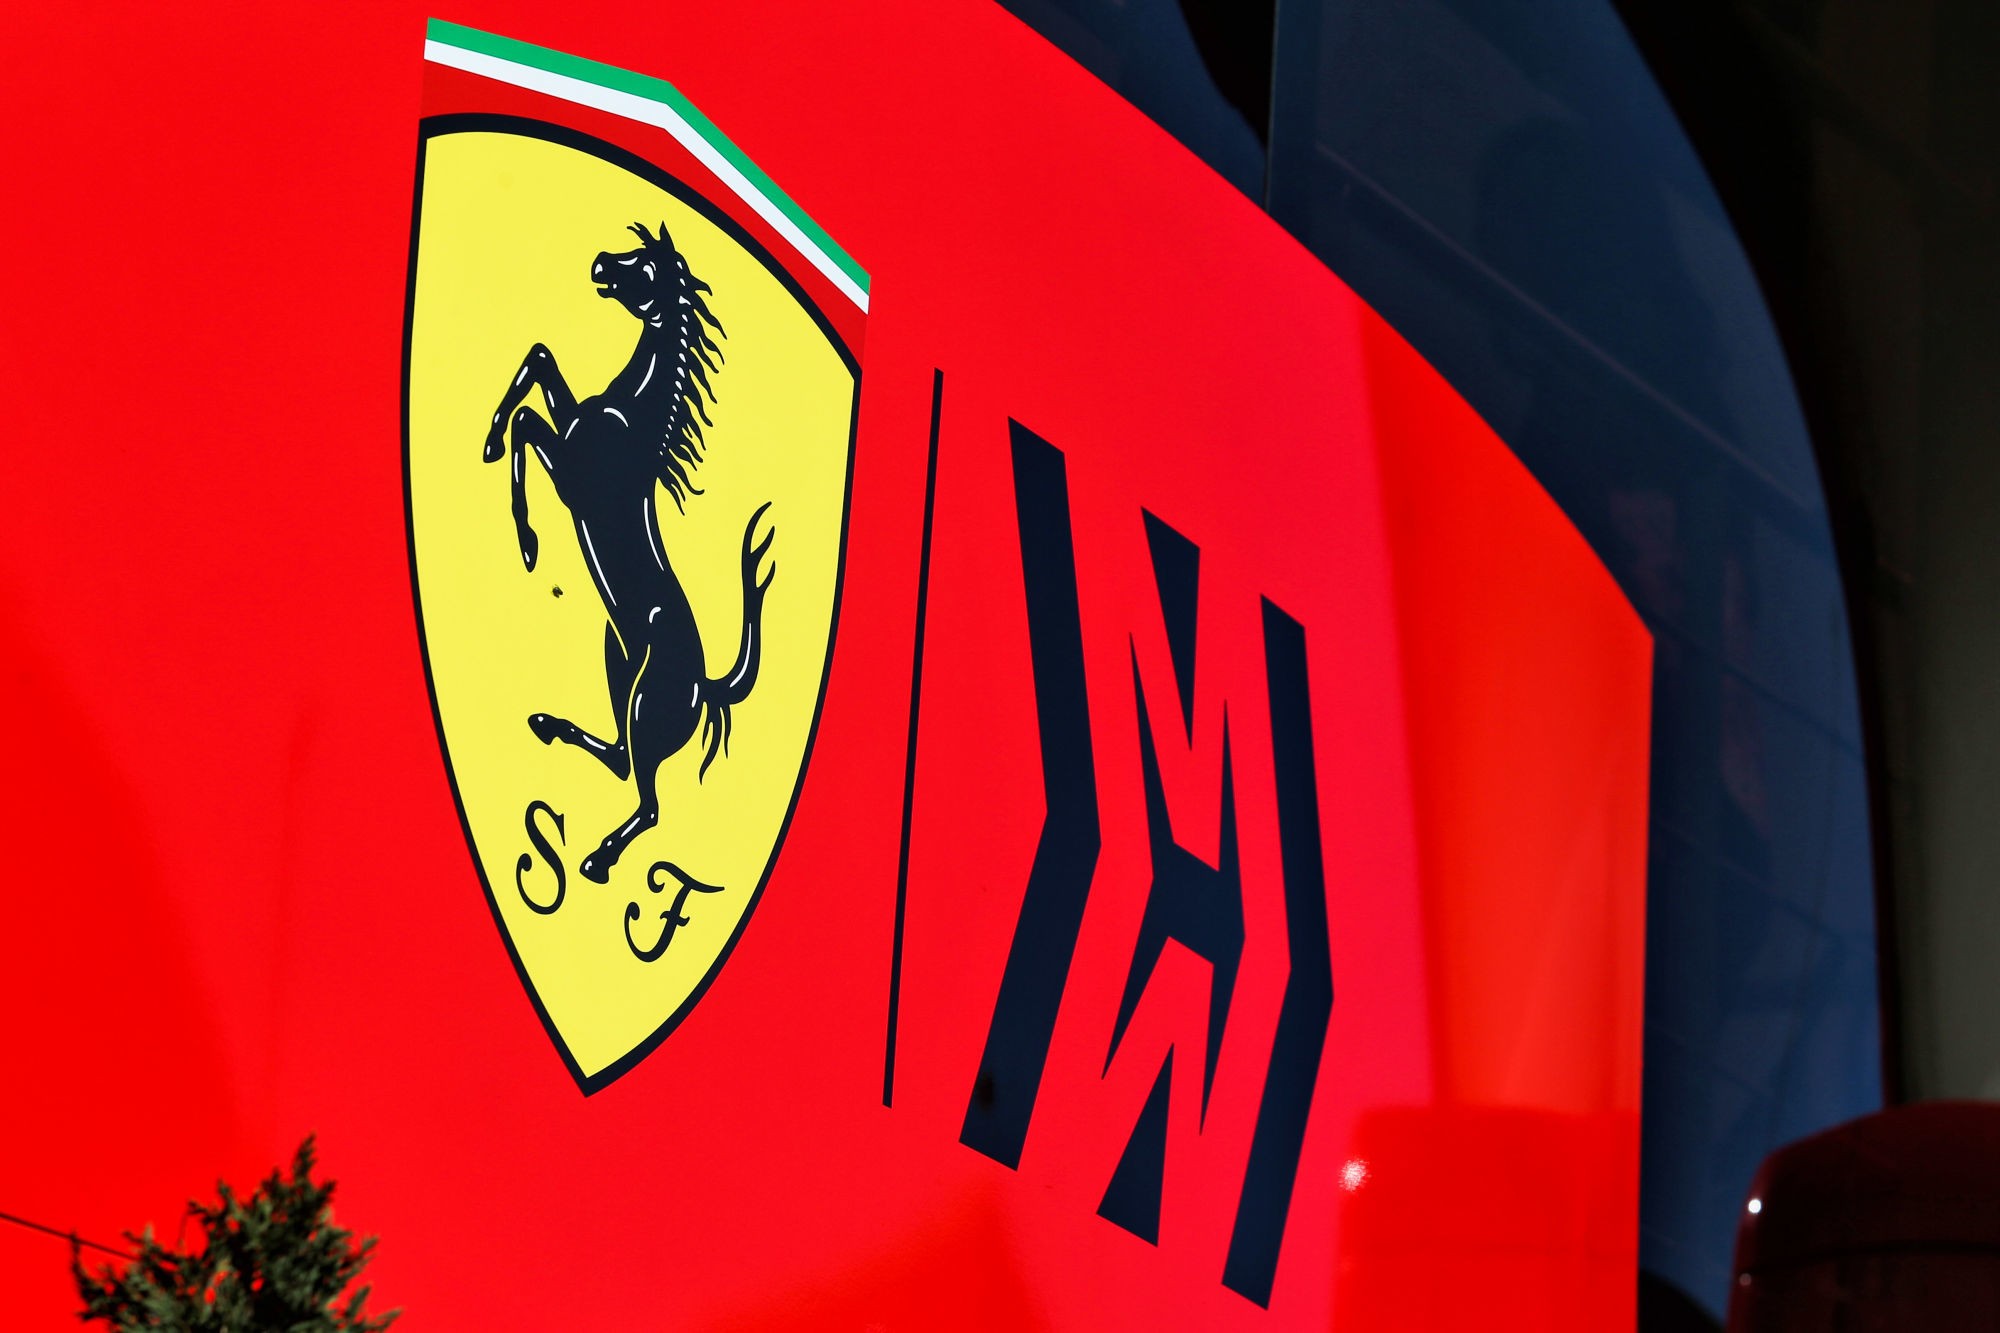 Ferrari logo -
Photo by Icon Sport